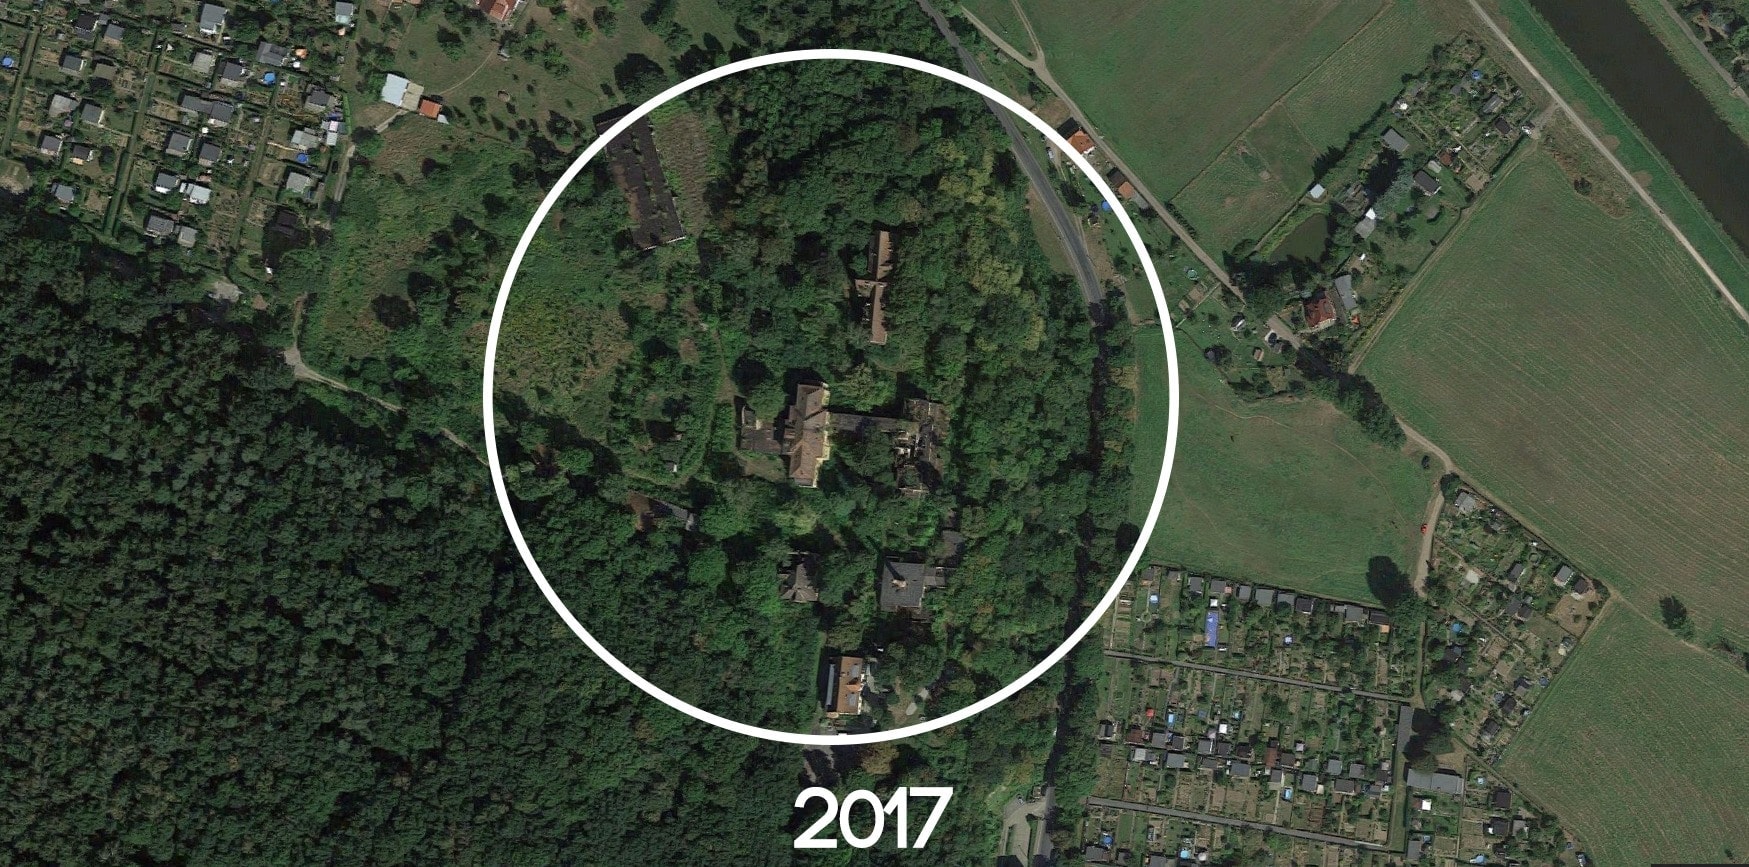 hopital-harold-greenwood-map-2017